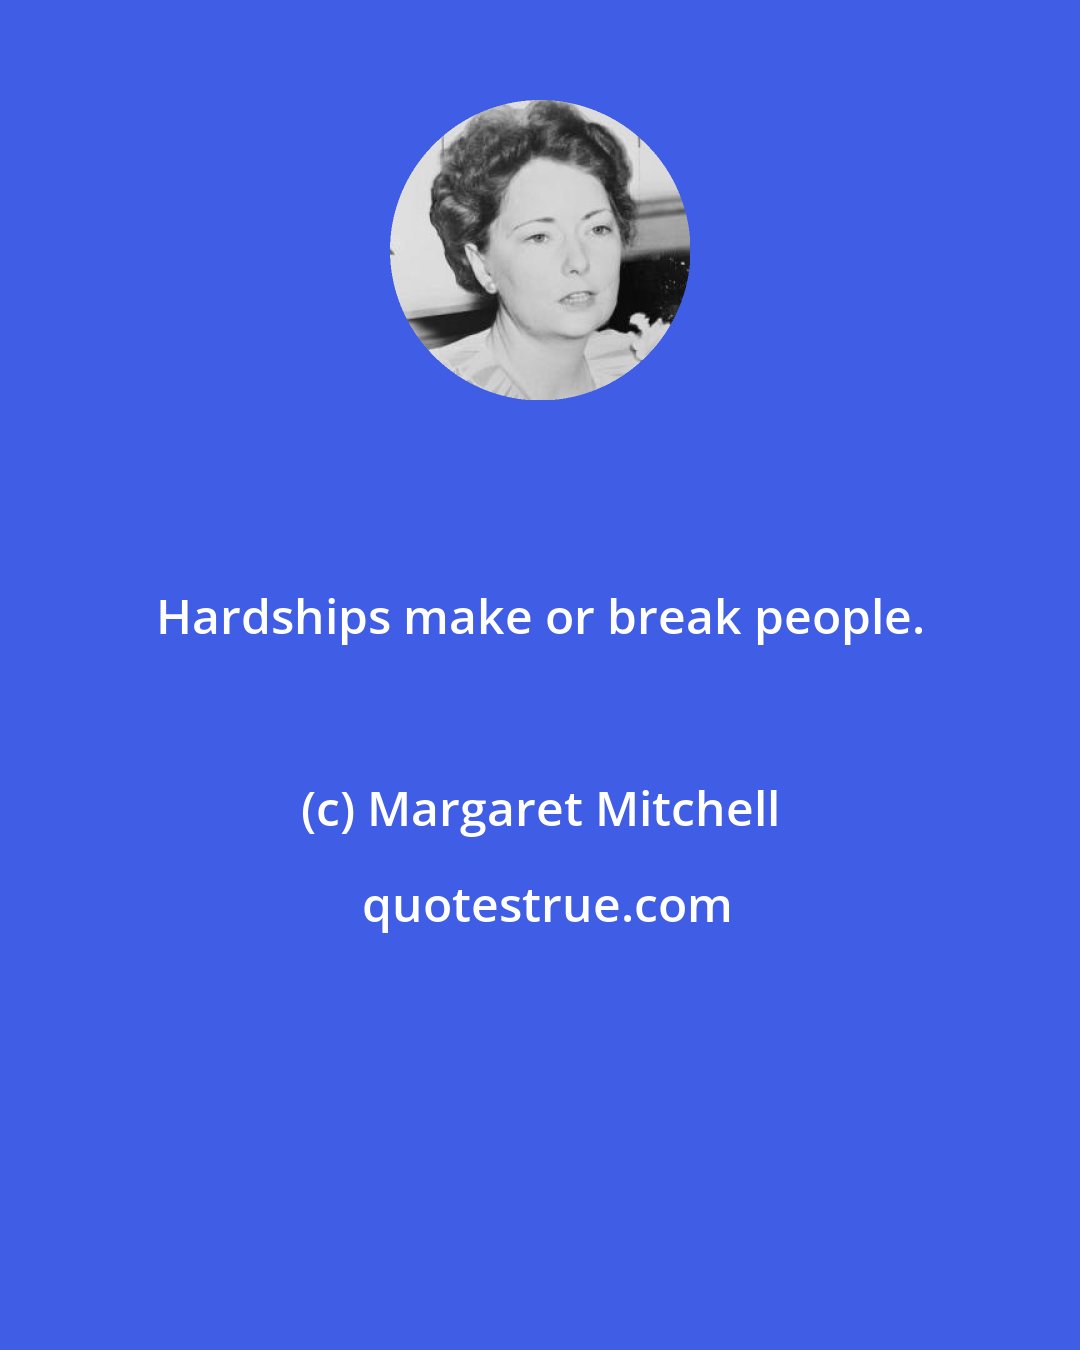 Margaret Mitchell: Hardships make or break people.